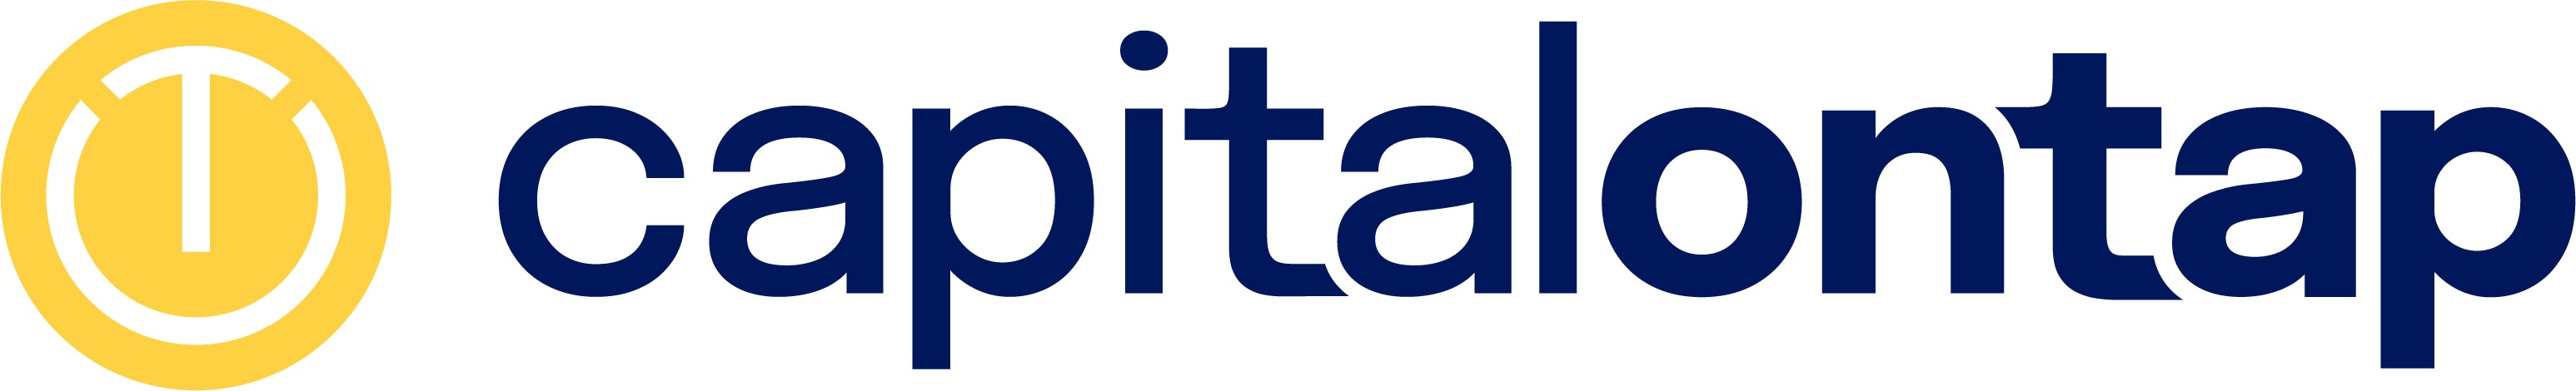 Capital On Tap logo